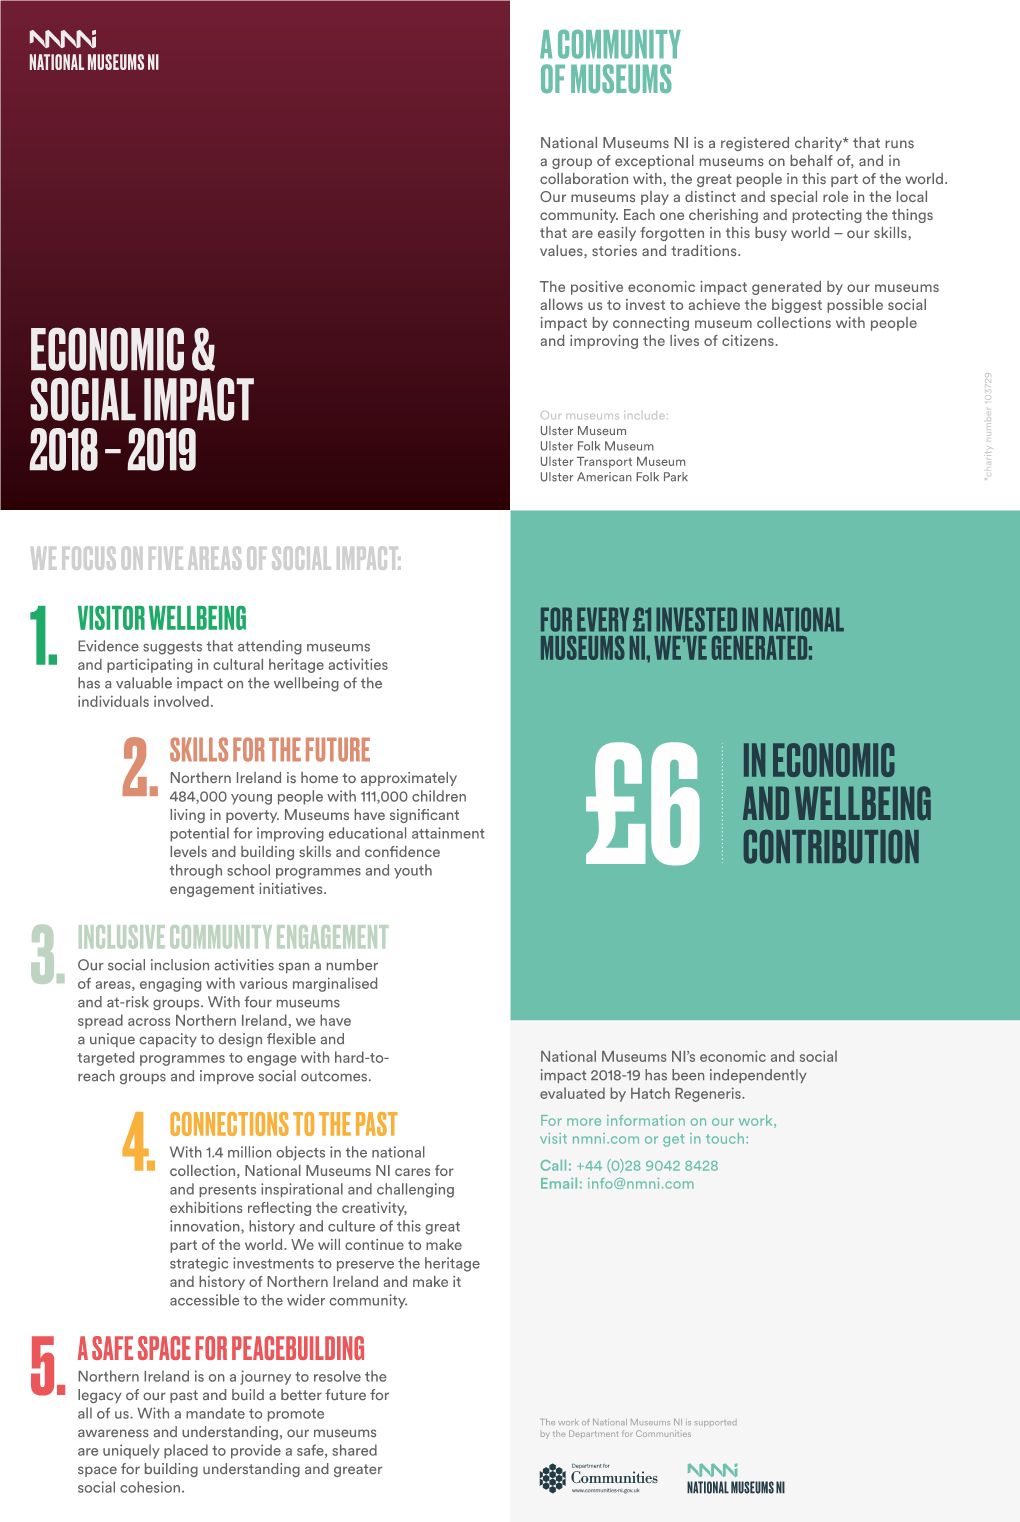 National Museums NI Social & Economic Impact Report 2018-2019